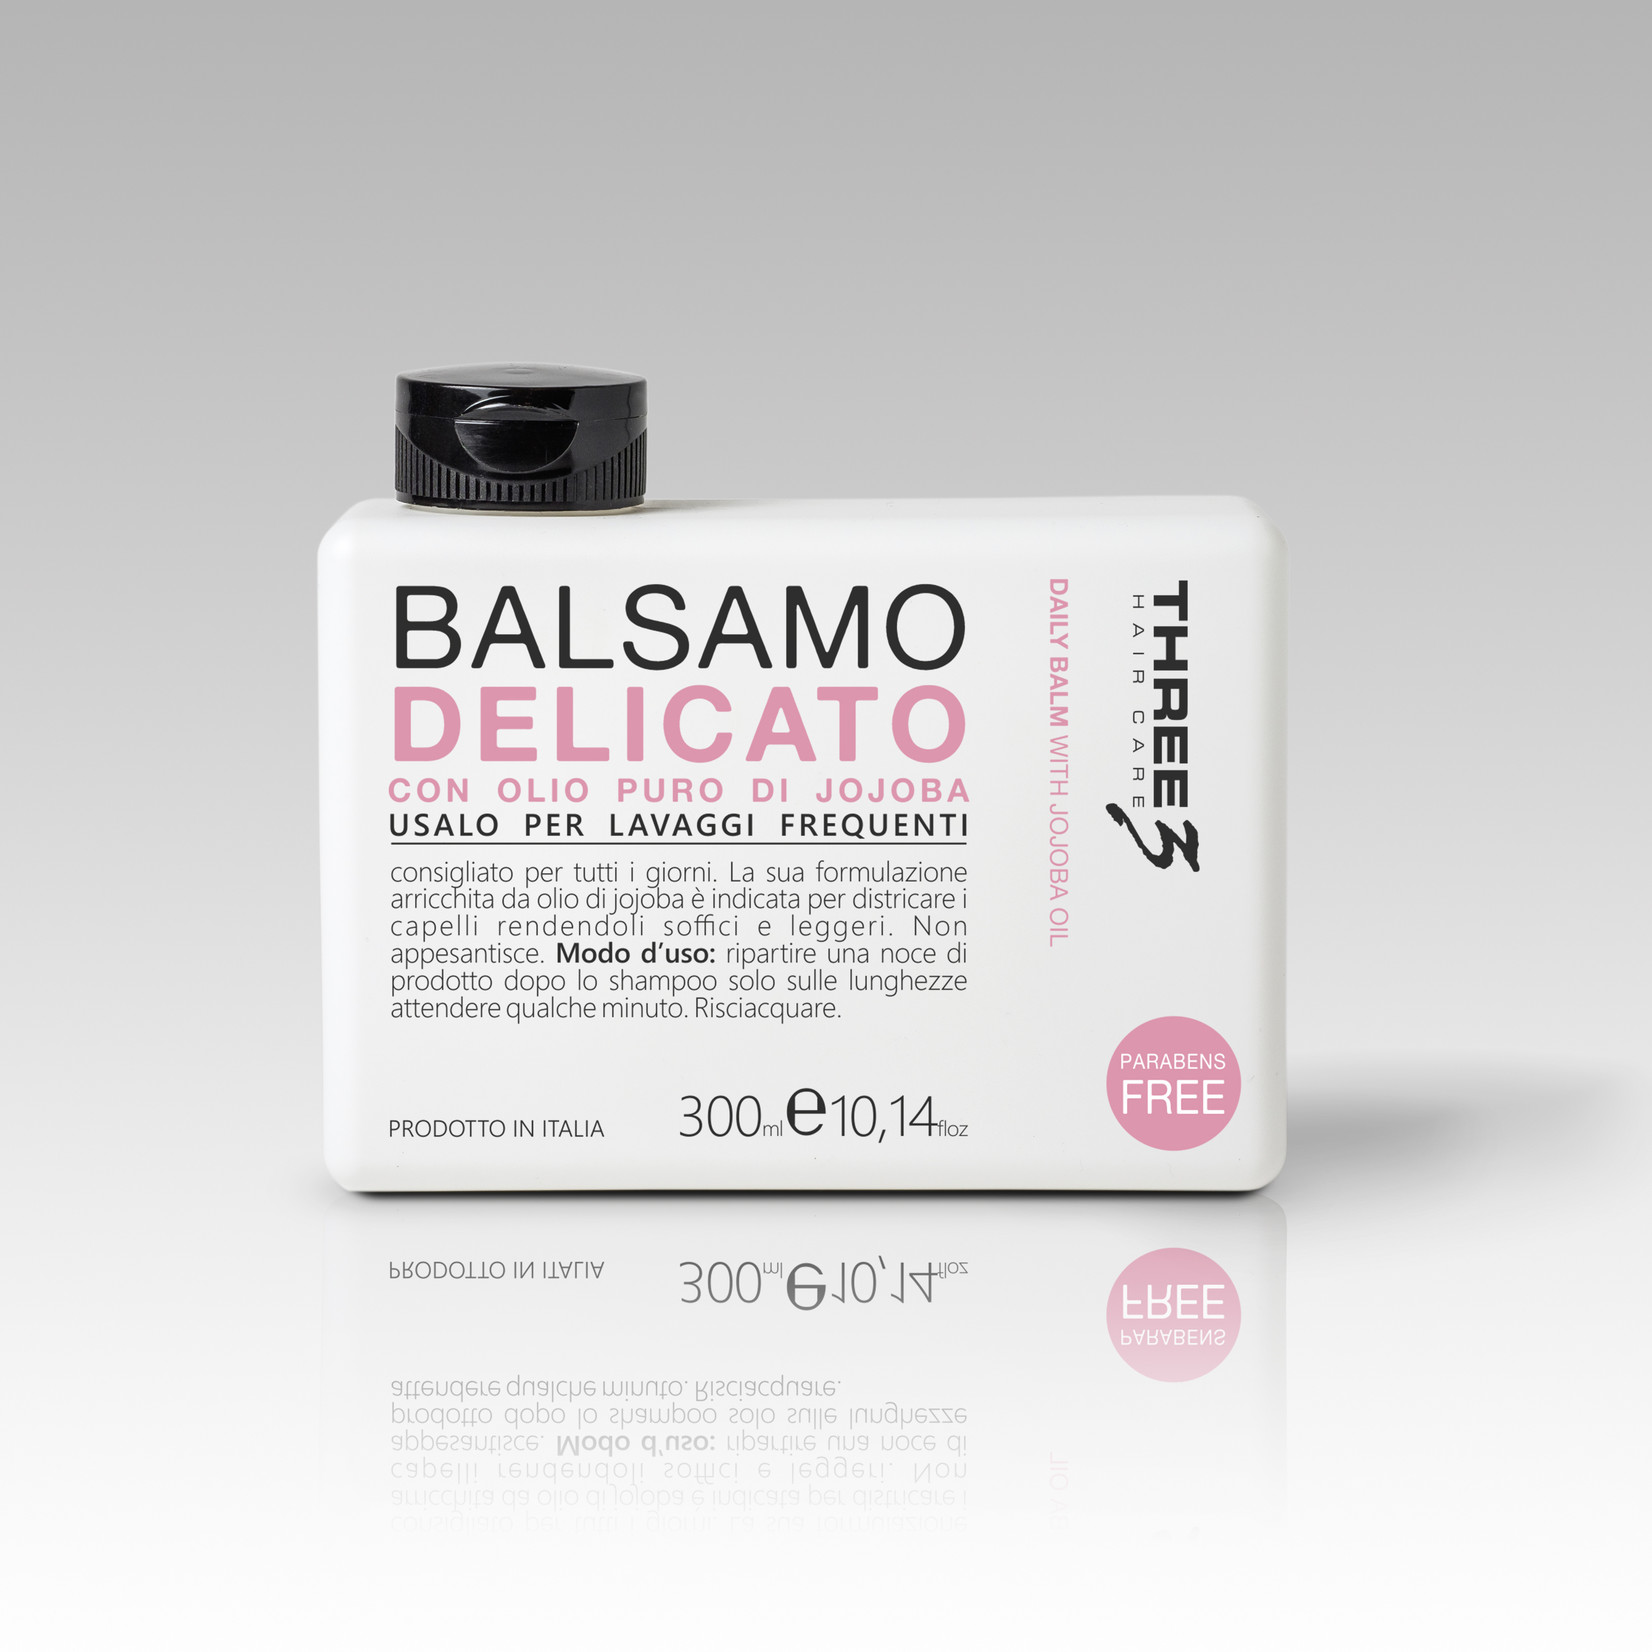 Faipa Three Balsamo Delicato 300ml